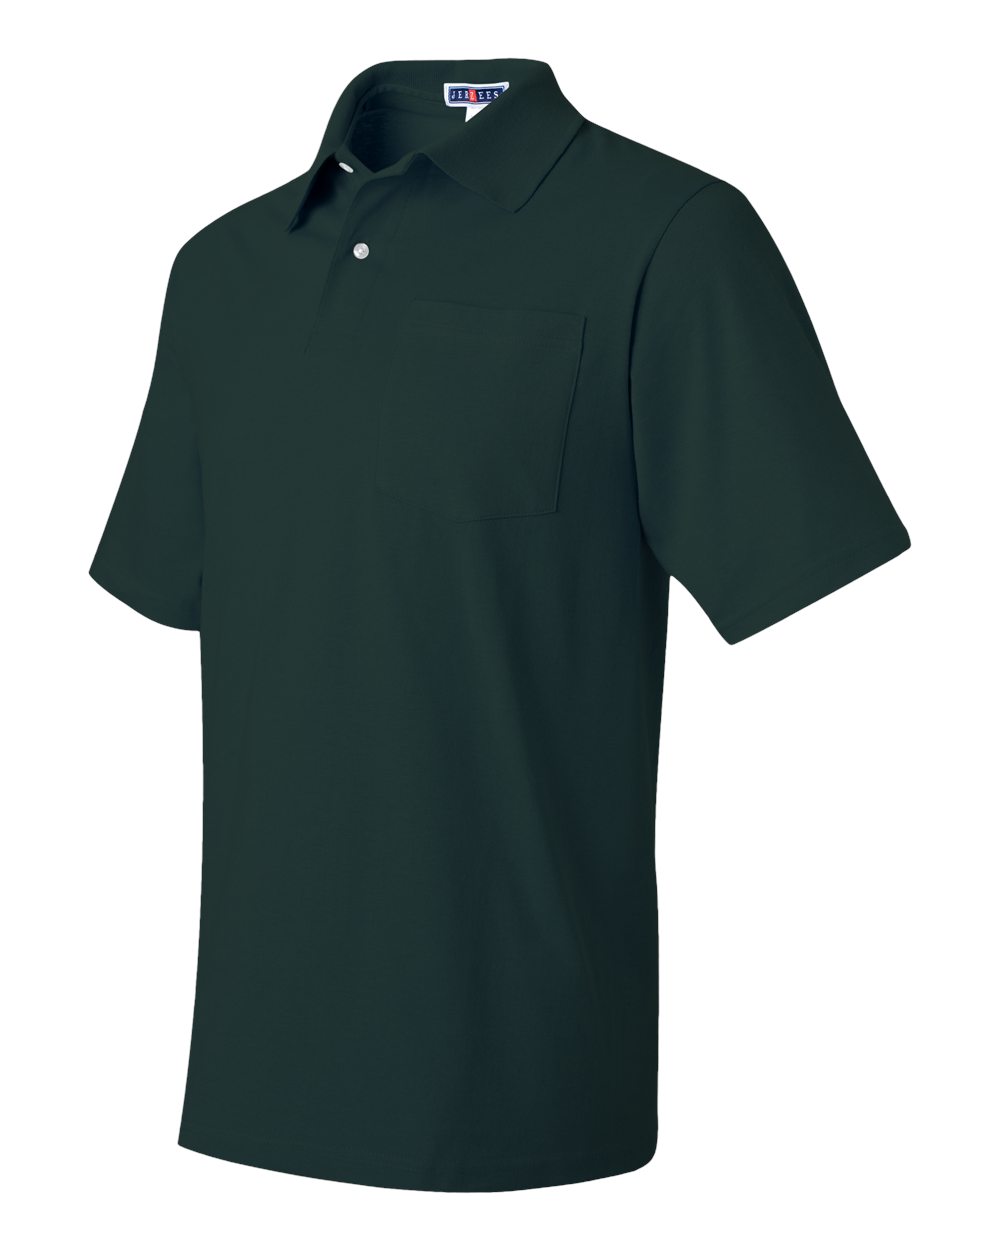 JERZEES 436MPR - SpotShield 50/50 Sport Shirt with a Pocket